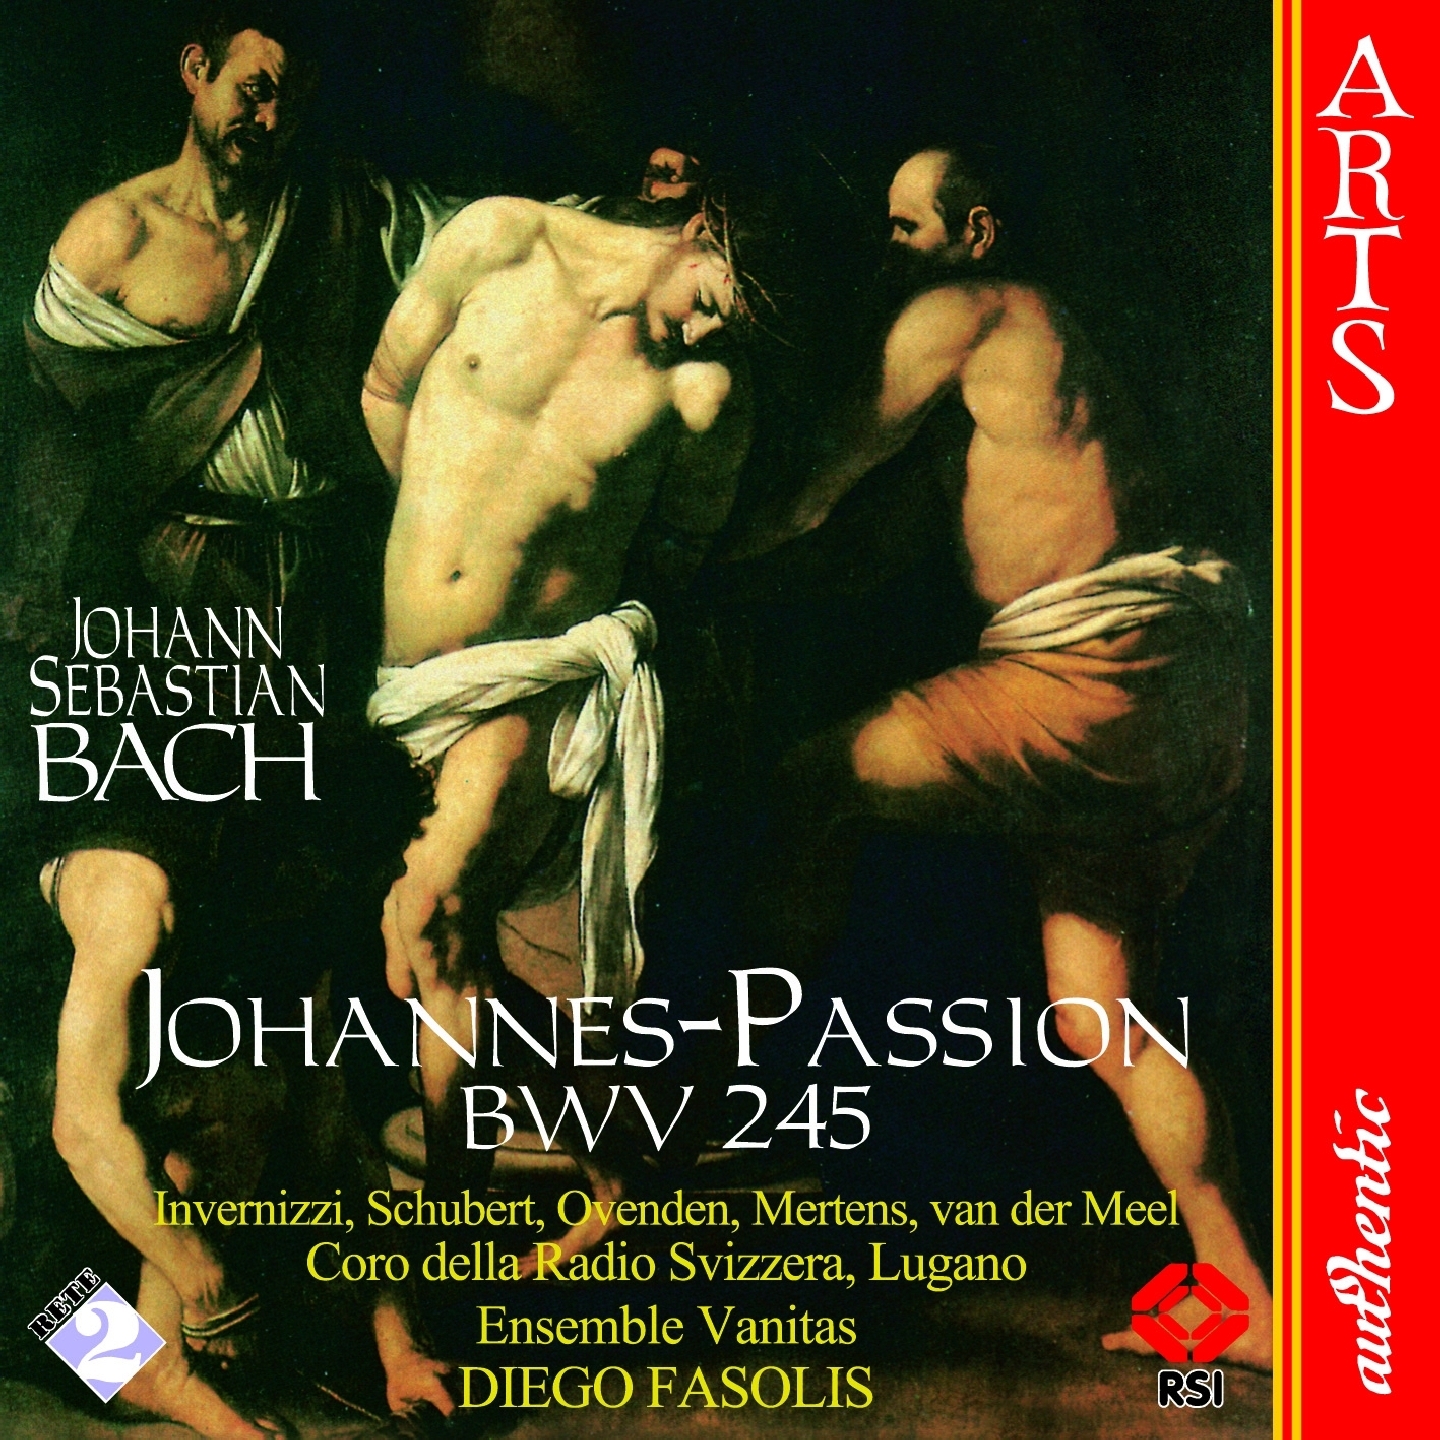 Johannes-Passion, BWV 245, Part II: 30. Aria "Es ist vollbracht" (Alto)